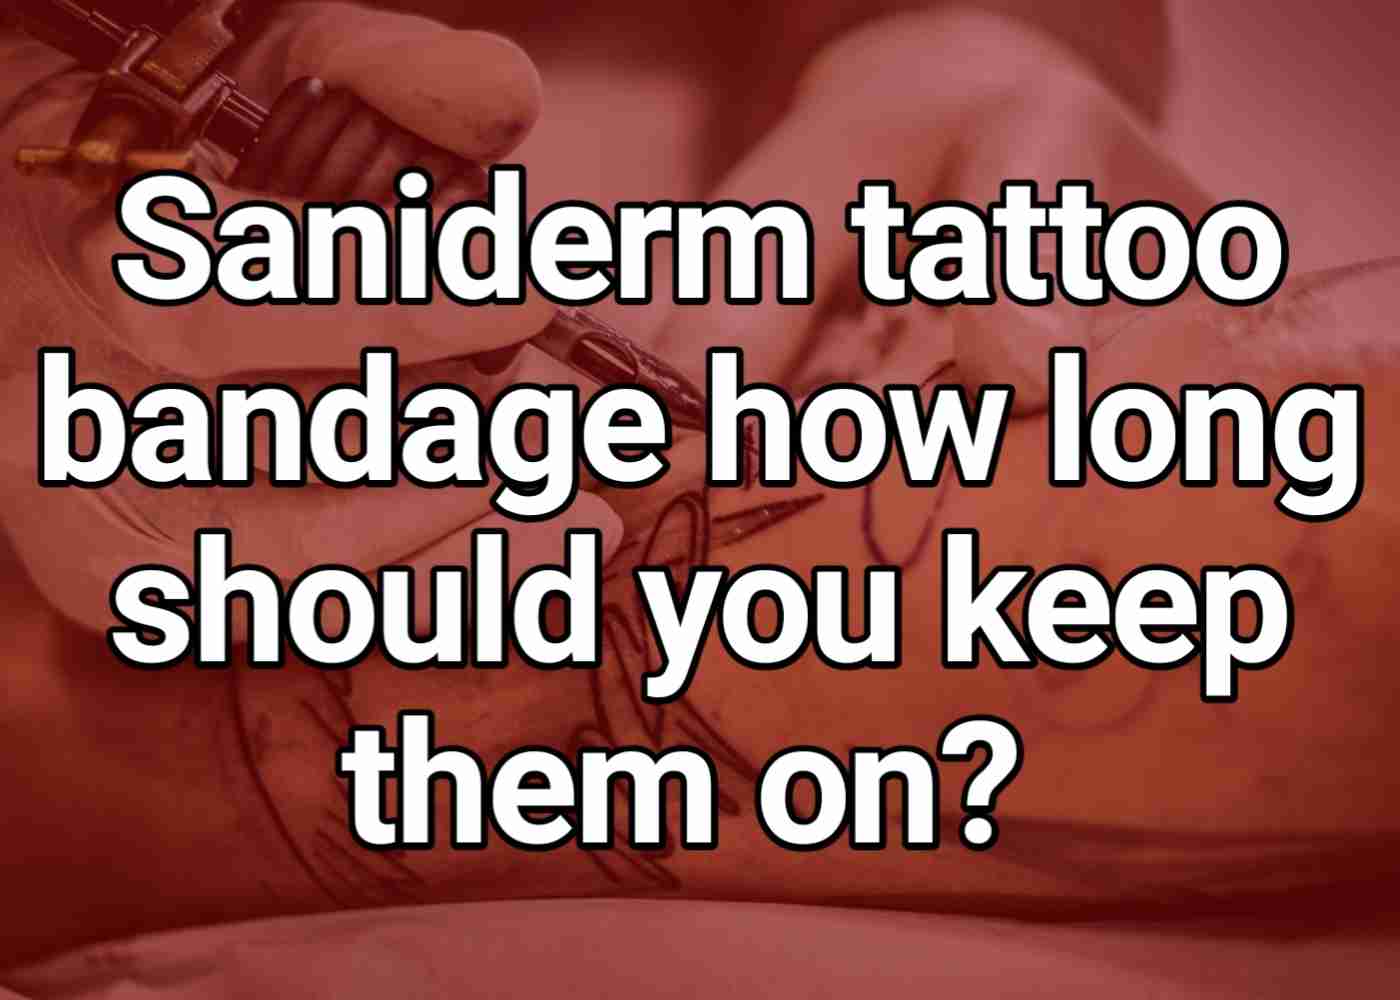 Saniderm tattoo bandage how long should you keep them on